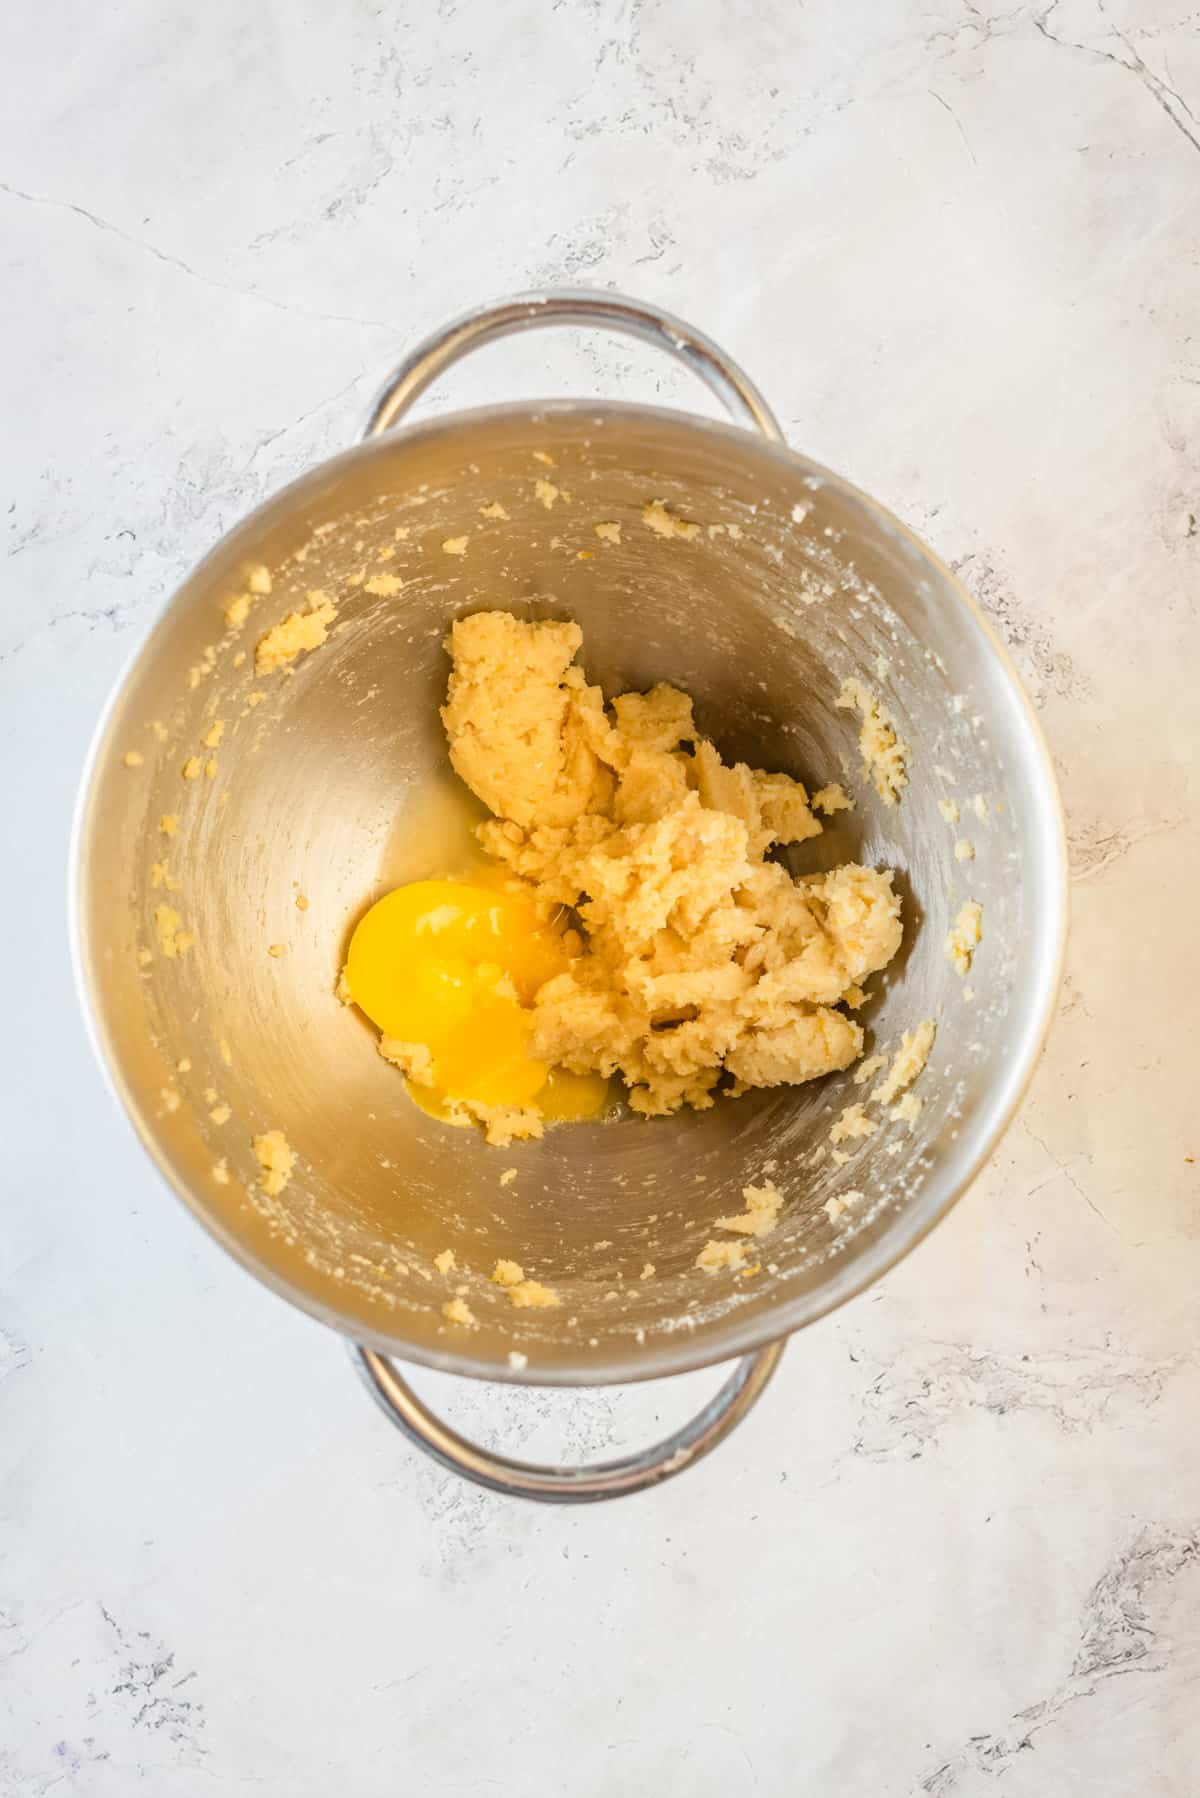 Adding egg yolk to mixed wet ingredients in mixing bowl.